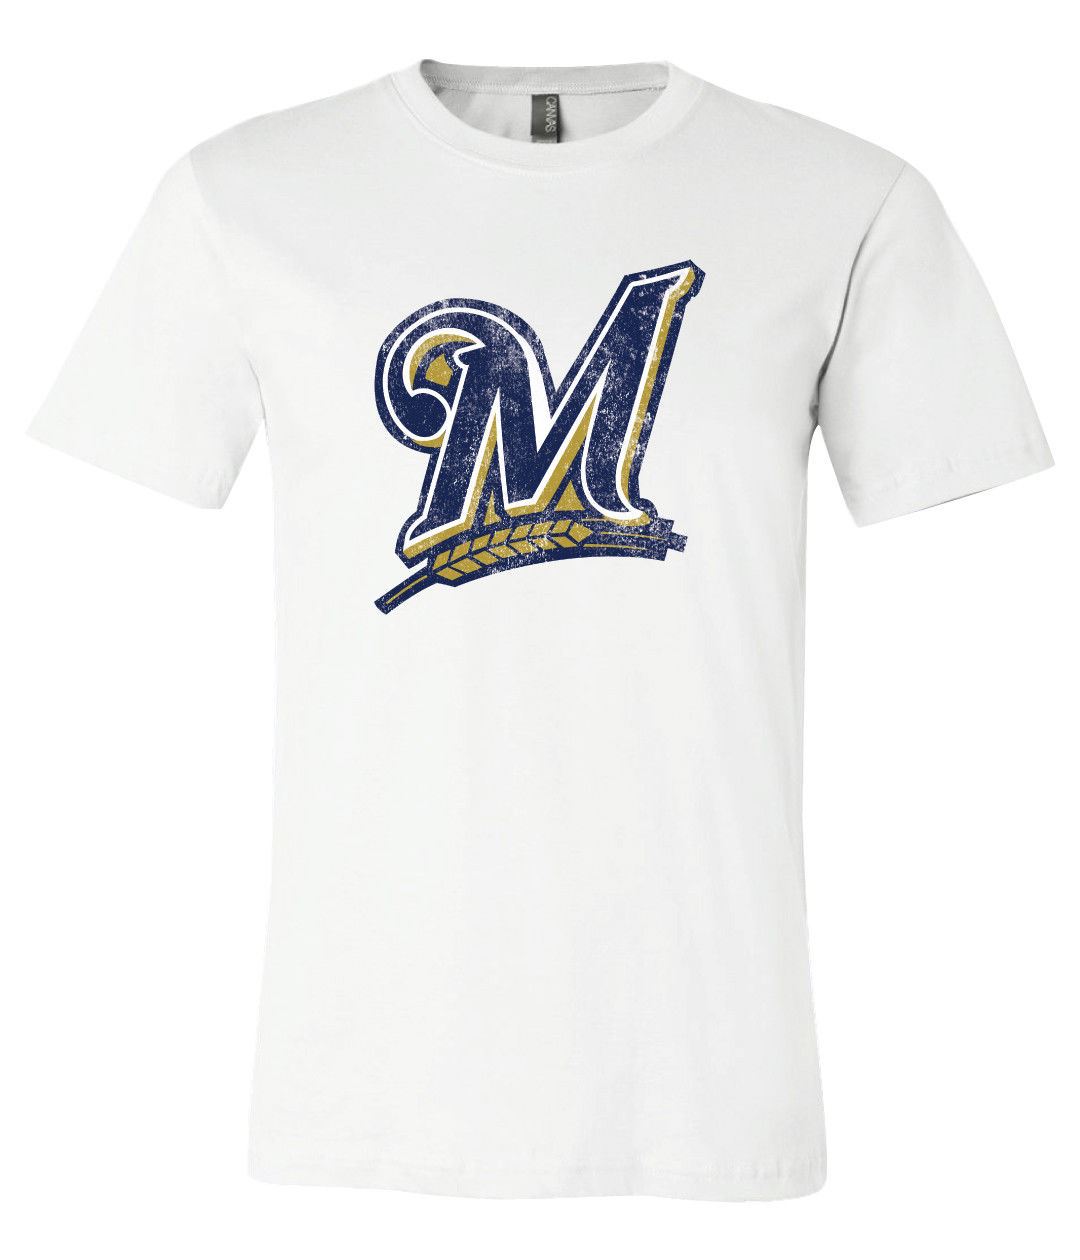  Milwaukee Brewers Shirts